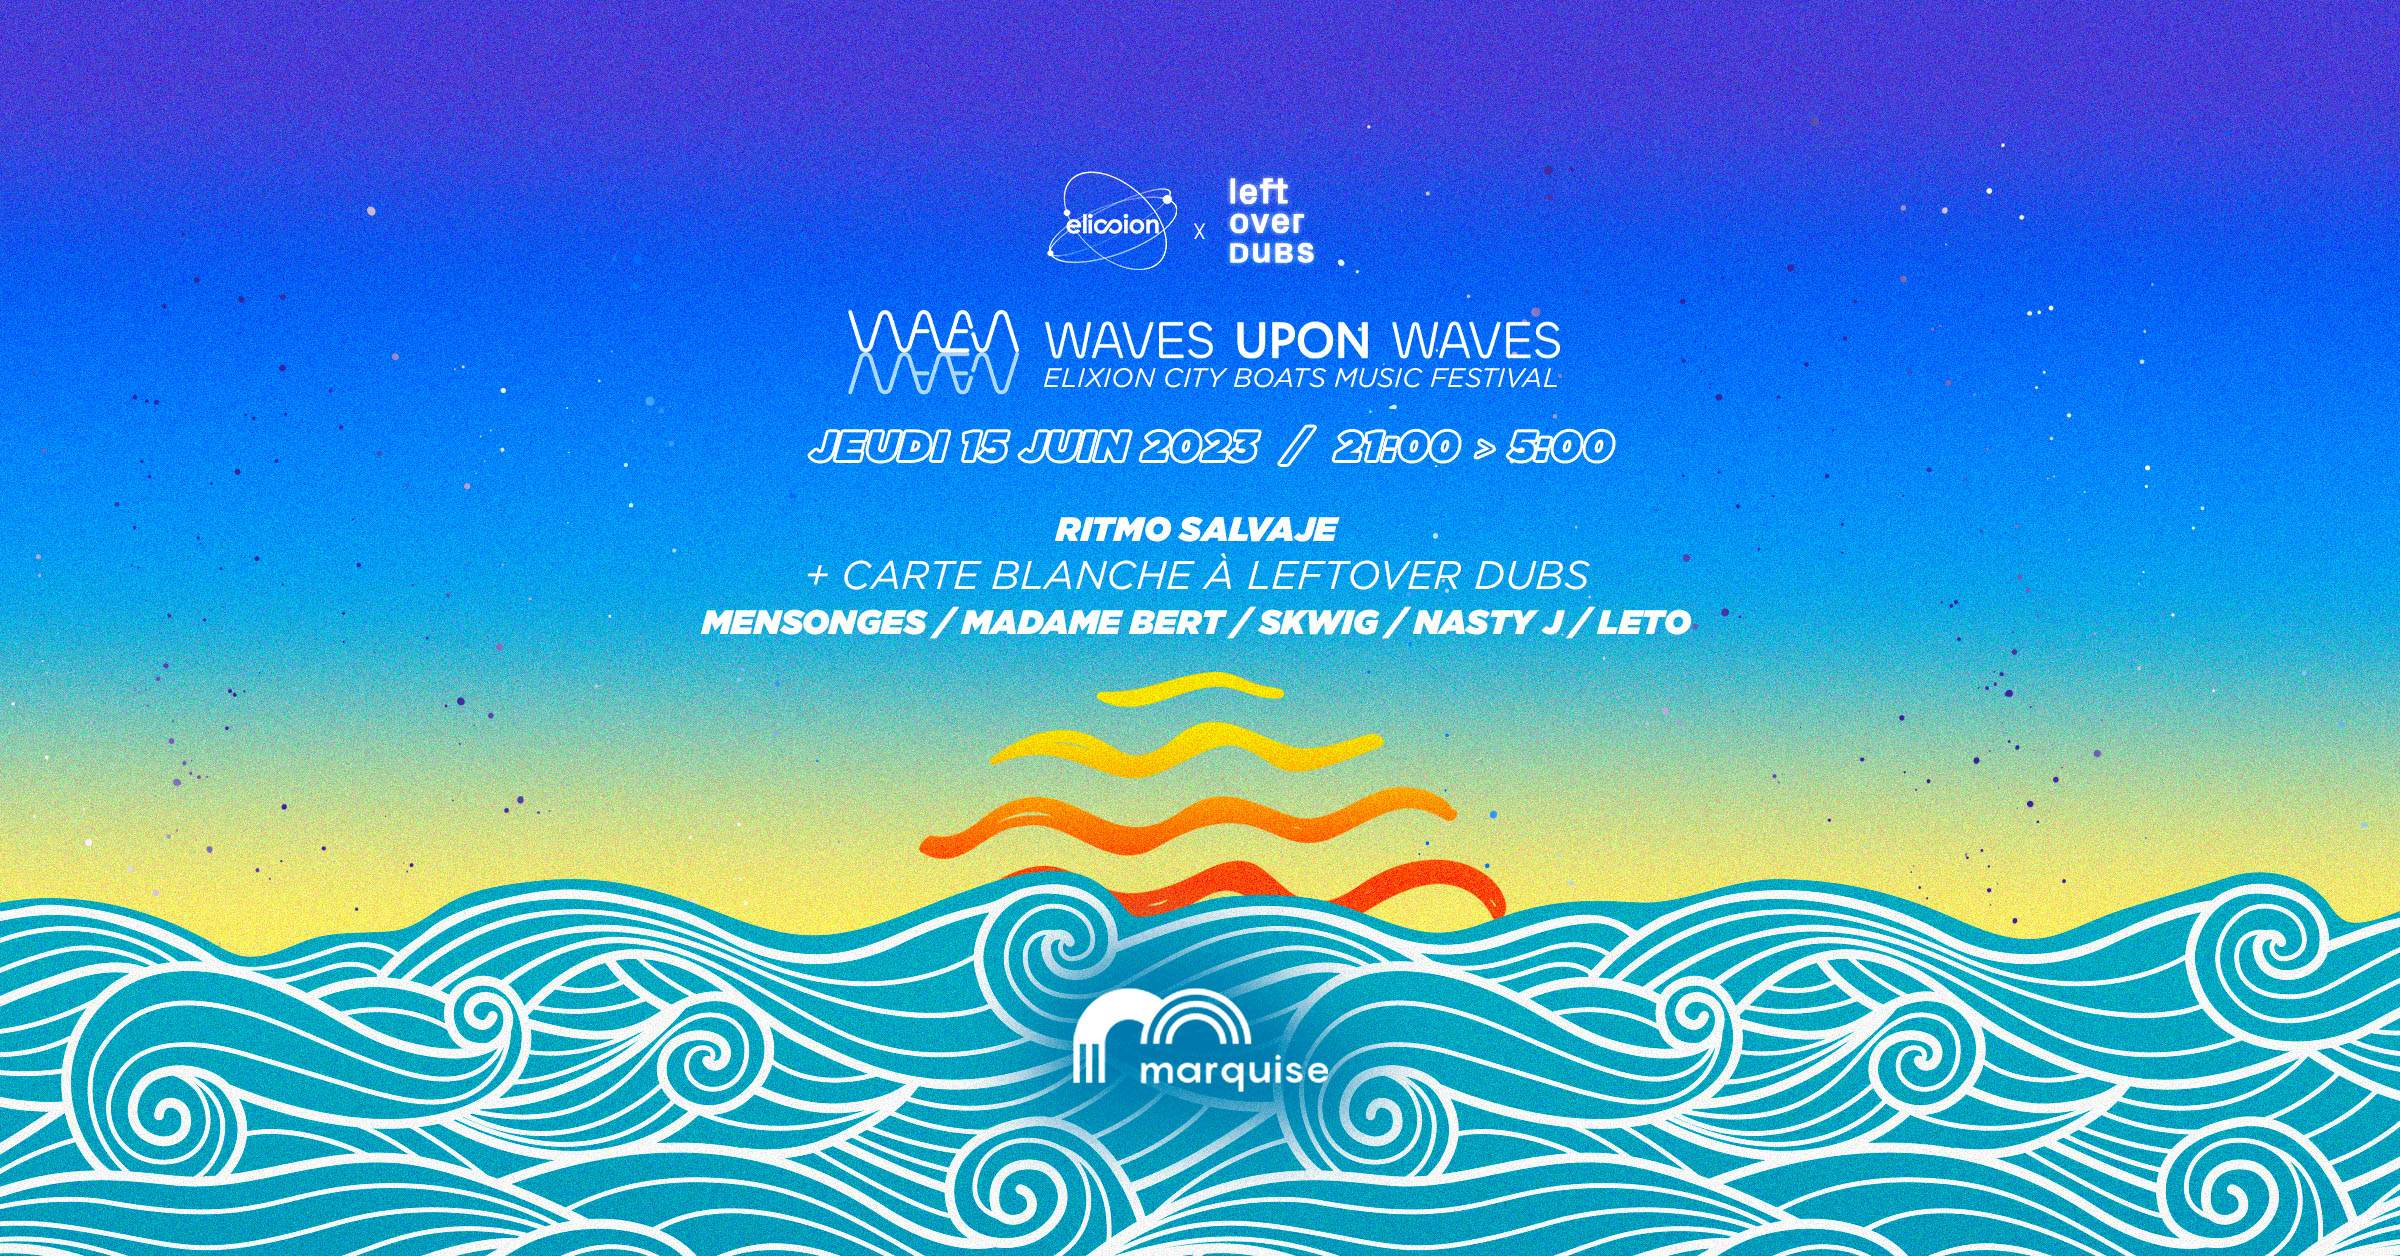 Waves Upon Waves Festival @La Marquise carte blanche à Leftover Dubs - Página frontal